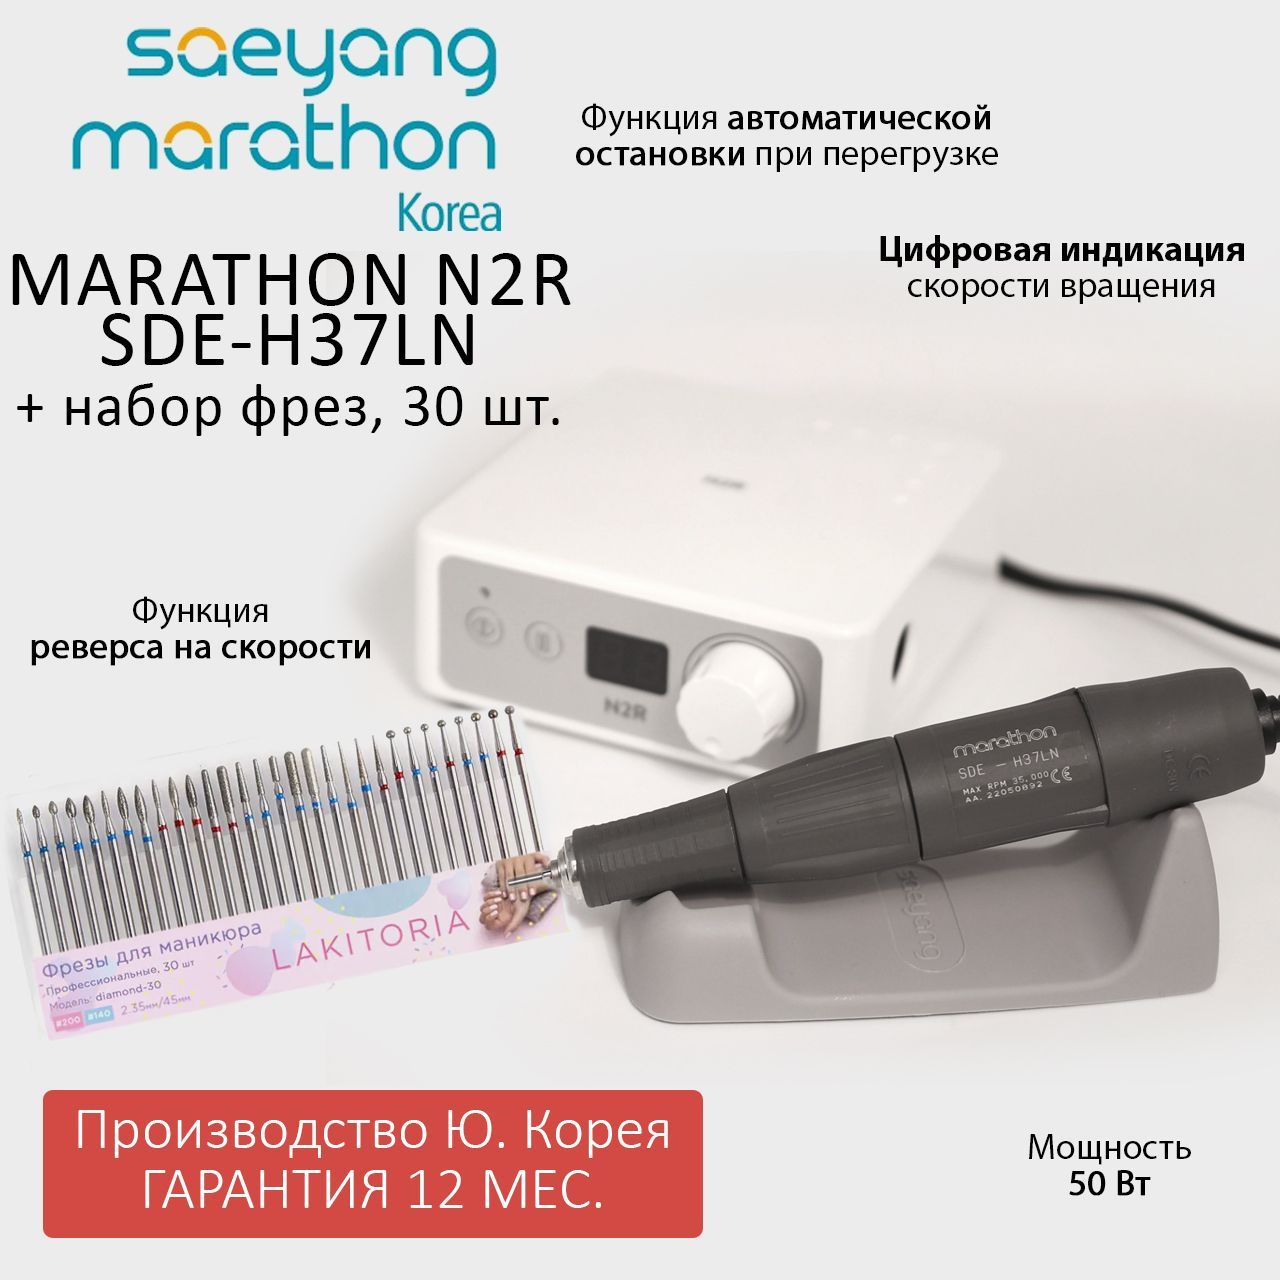 Аппарат для маникюра Marathon N2R SDE-H37LN без педали и набор фрез для маникюра 30шт аппарат для маникюра marathon n2r sde h37ln без педали